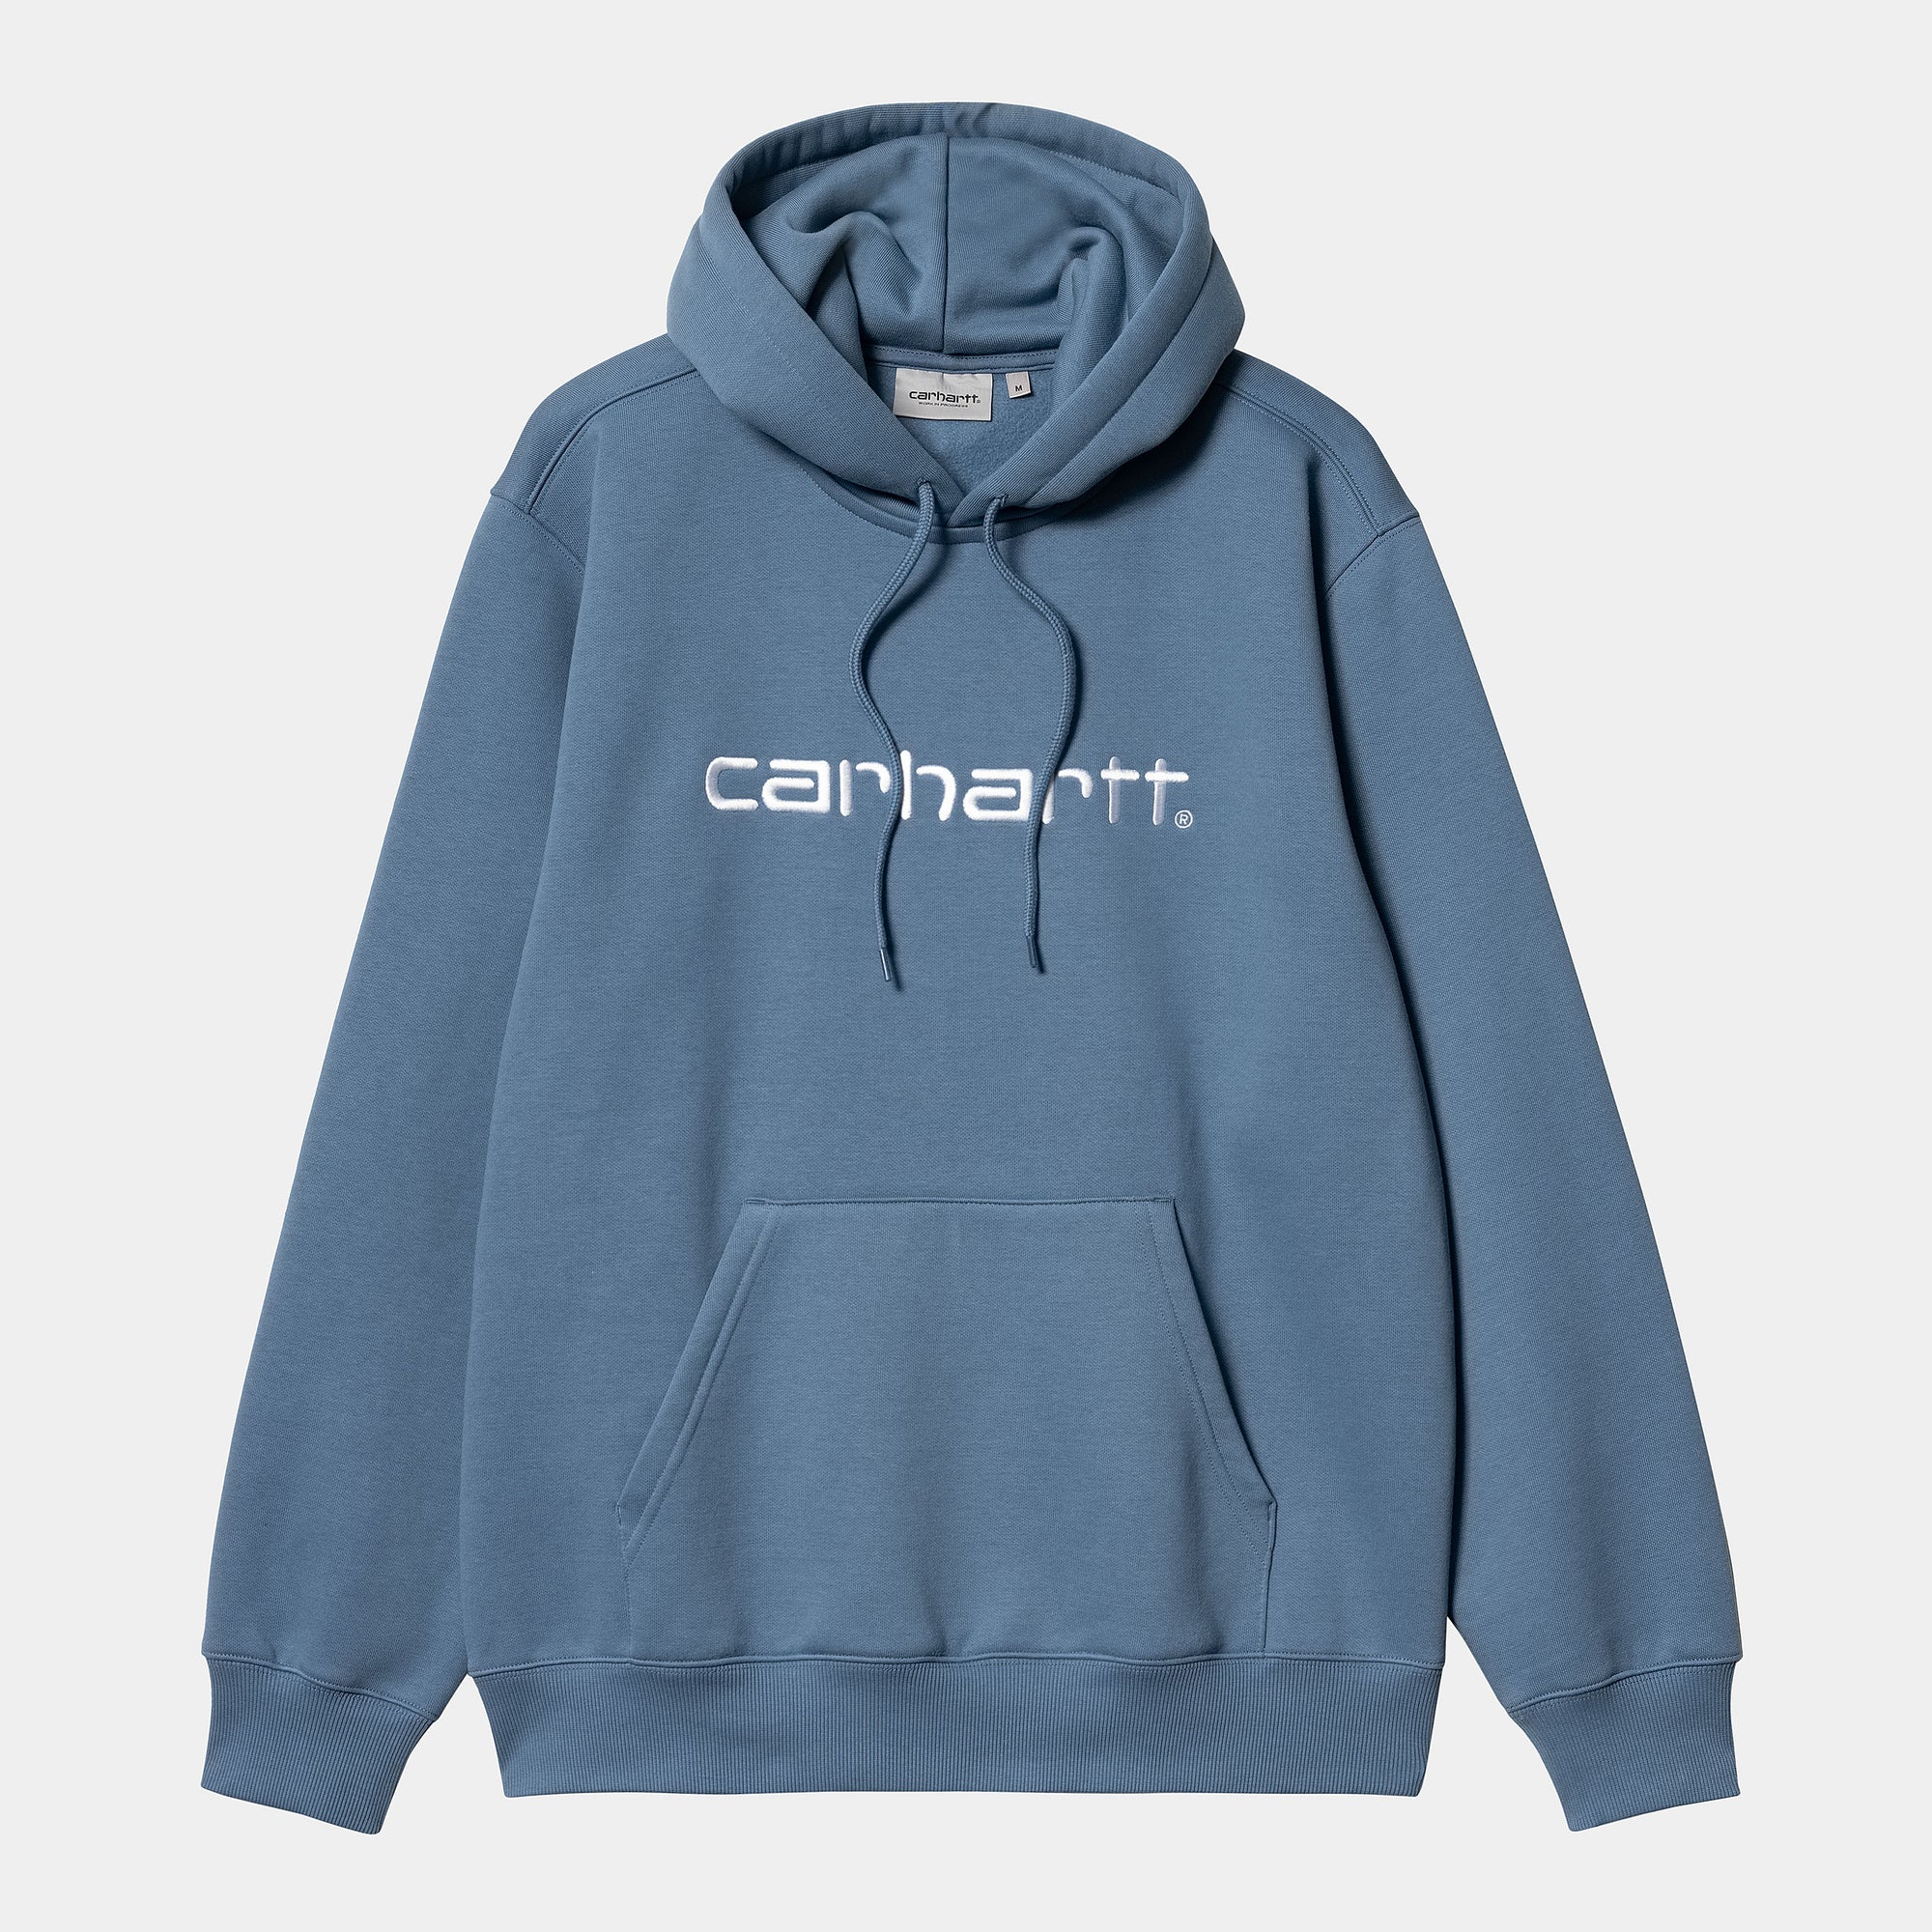 Carhartt WIP - Carhartt Pullover Hooded Sweatshirt - Sorrent / White